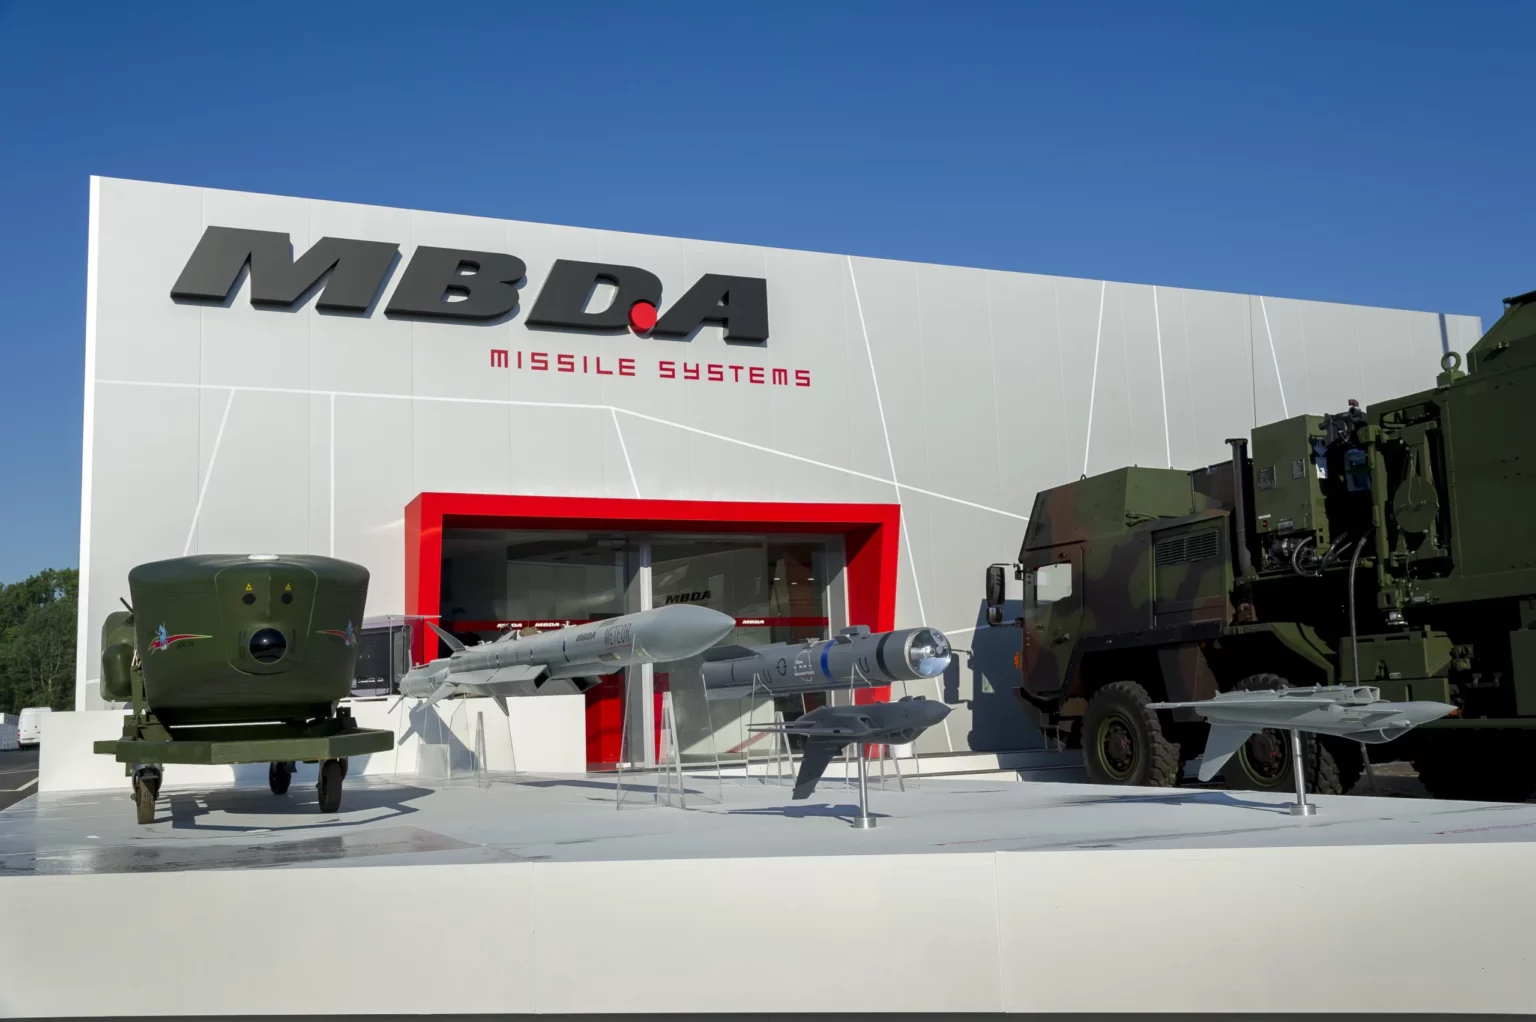 uk-arm-of-european-missile-maker-mbda-signs-1-9-billion-pound-deal-with-poland